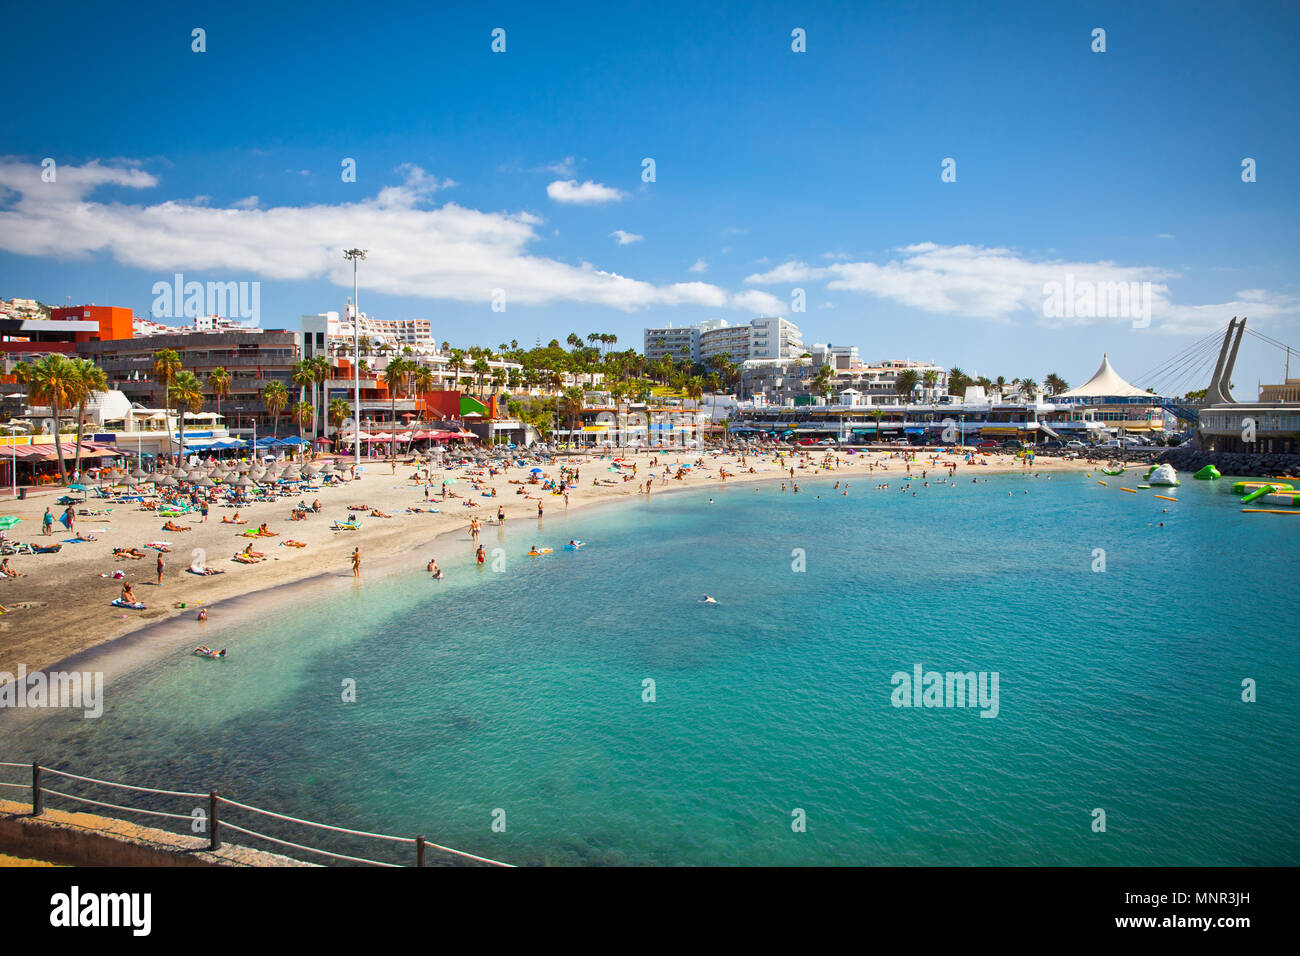 Schöner Strand in Costa Adeje Playa de las Americas auf Teneriffa, Spanien  senden Stockfotografie - Alamy